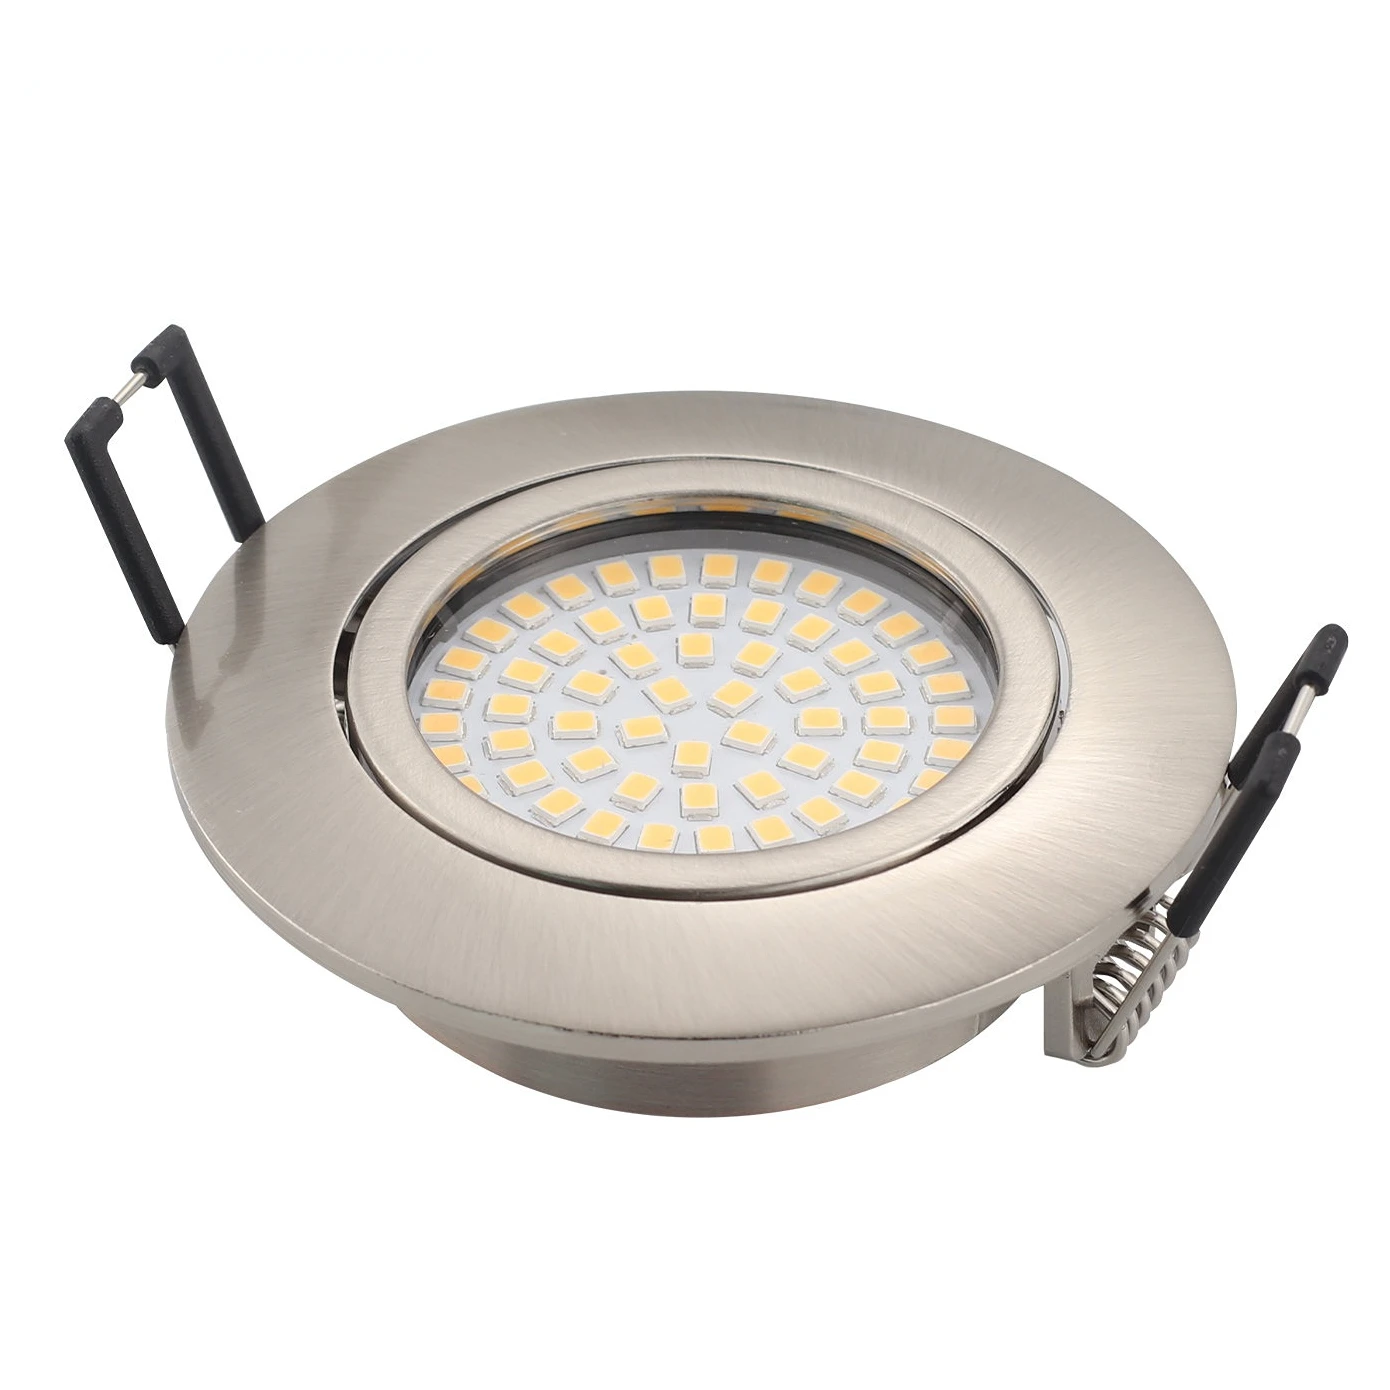 

5W / 450lm Mains Powered Ultra Slim Adjustable Tilt Recessed LED Ceiling Light Downlight Round Spot Lights for Ceiling